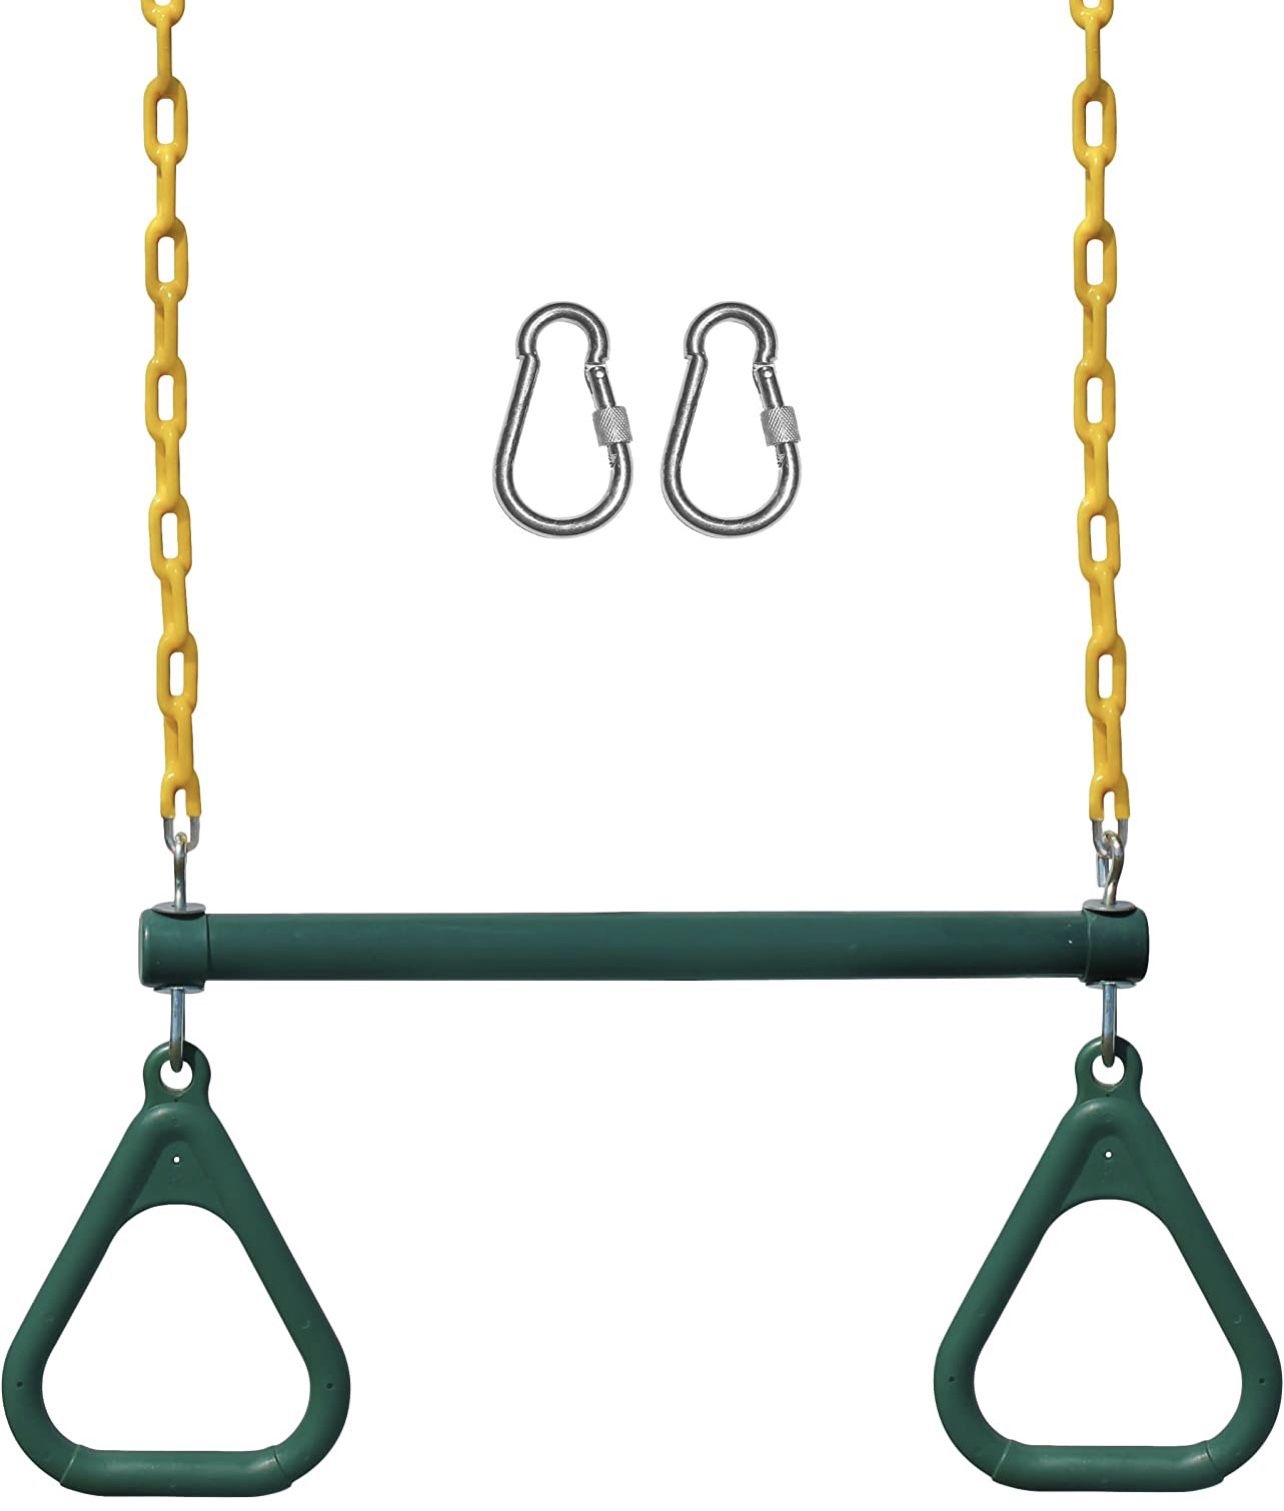 Jungle Gym Kingdom Swing Sets for Backyard, Monkey Bars & Swingset Accessories - Set Includes 18" Trapeze Swing Bar & 48" Heavy Duty Chain with Lockin